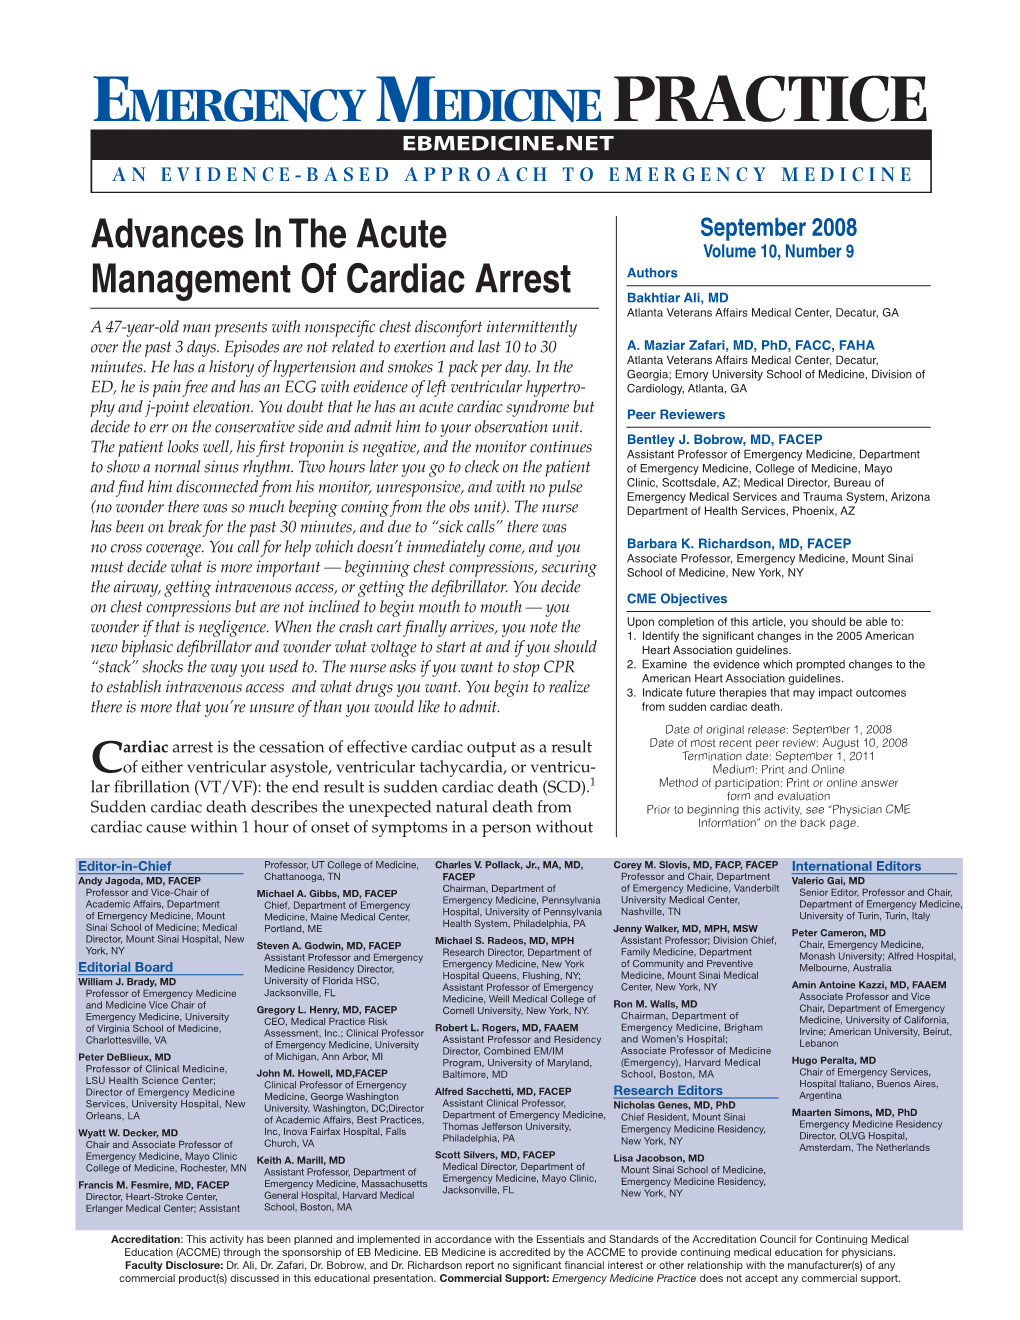 Advances in the Acute Management of Cardiac Arrest